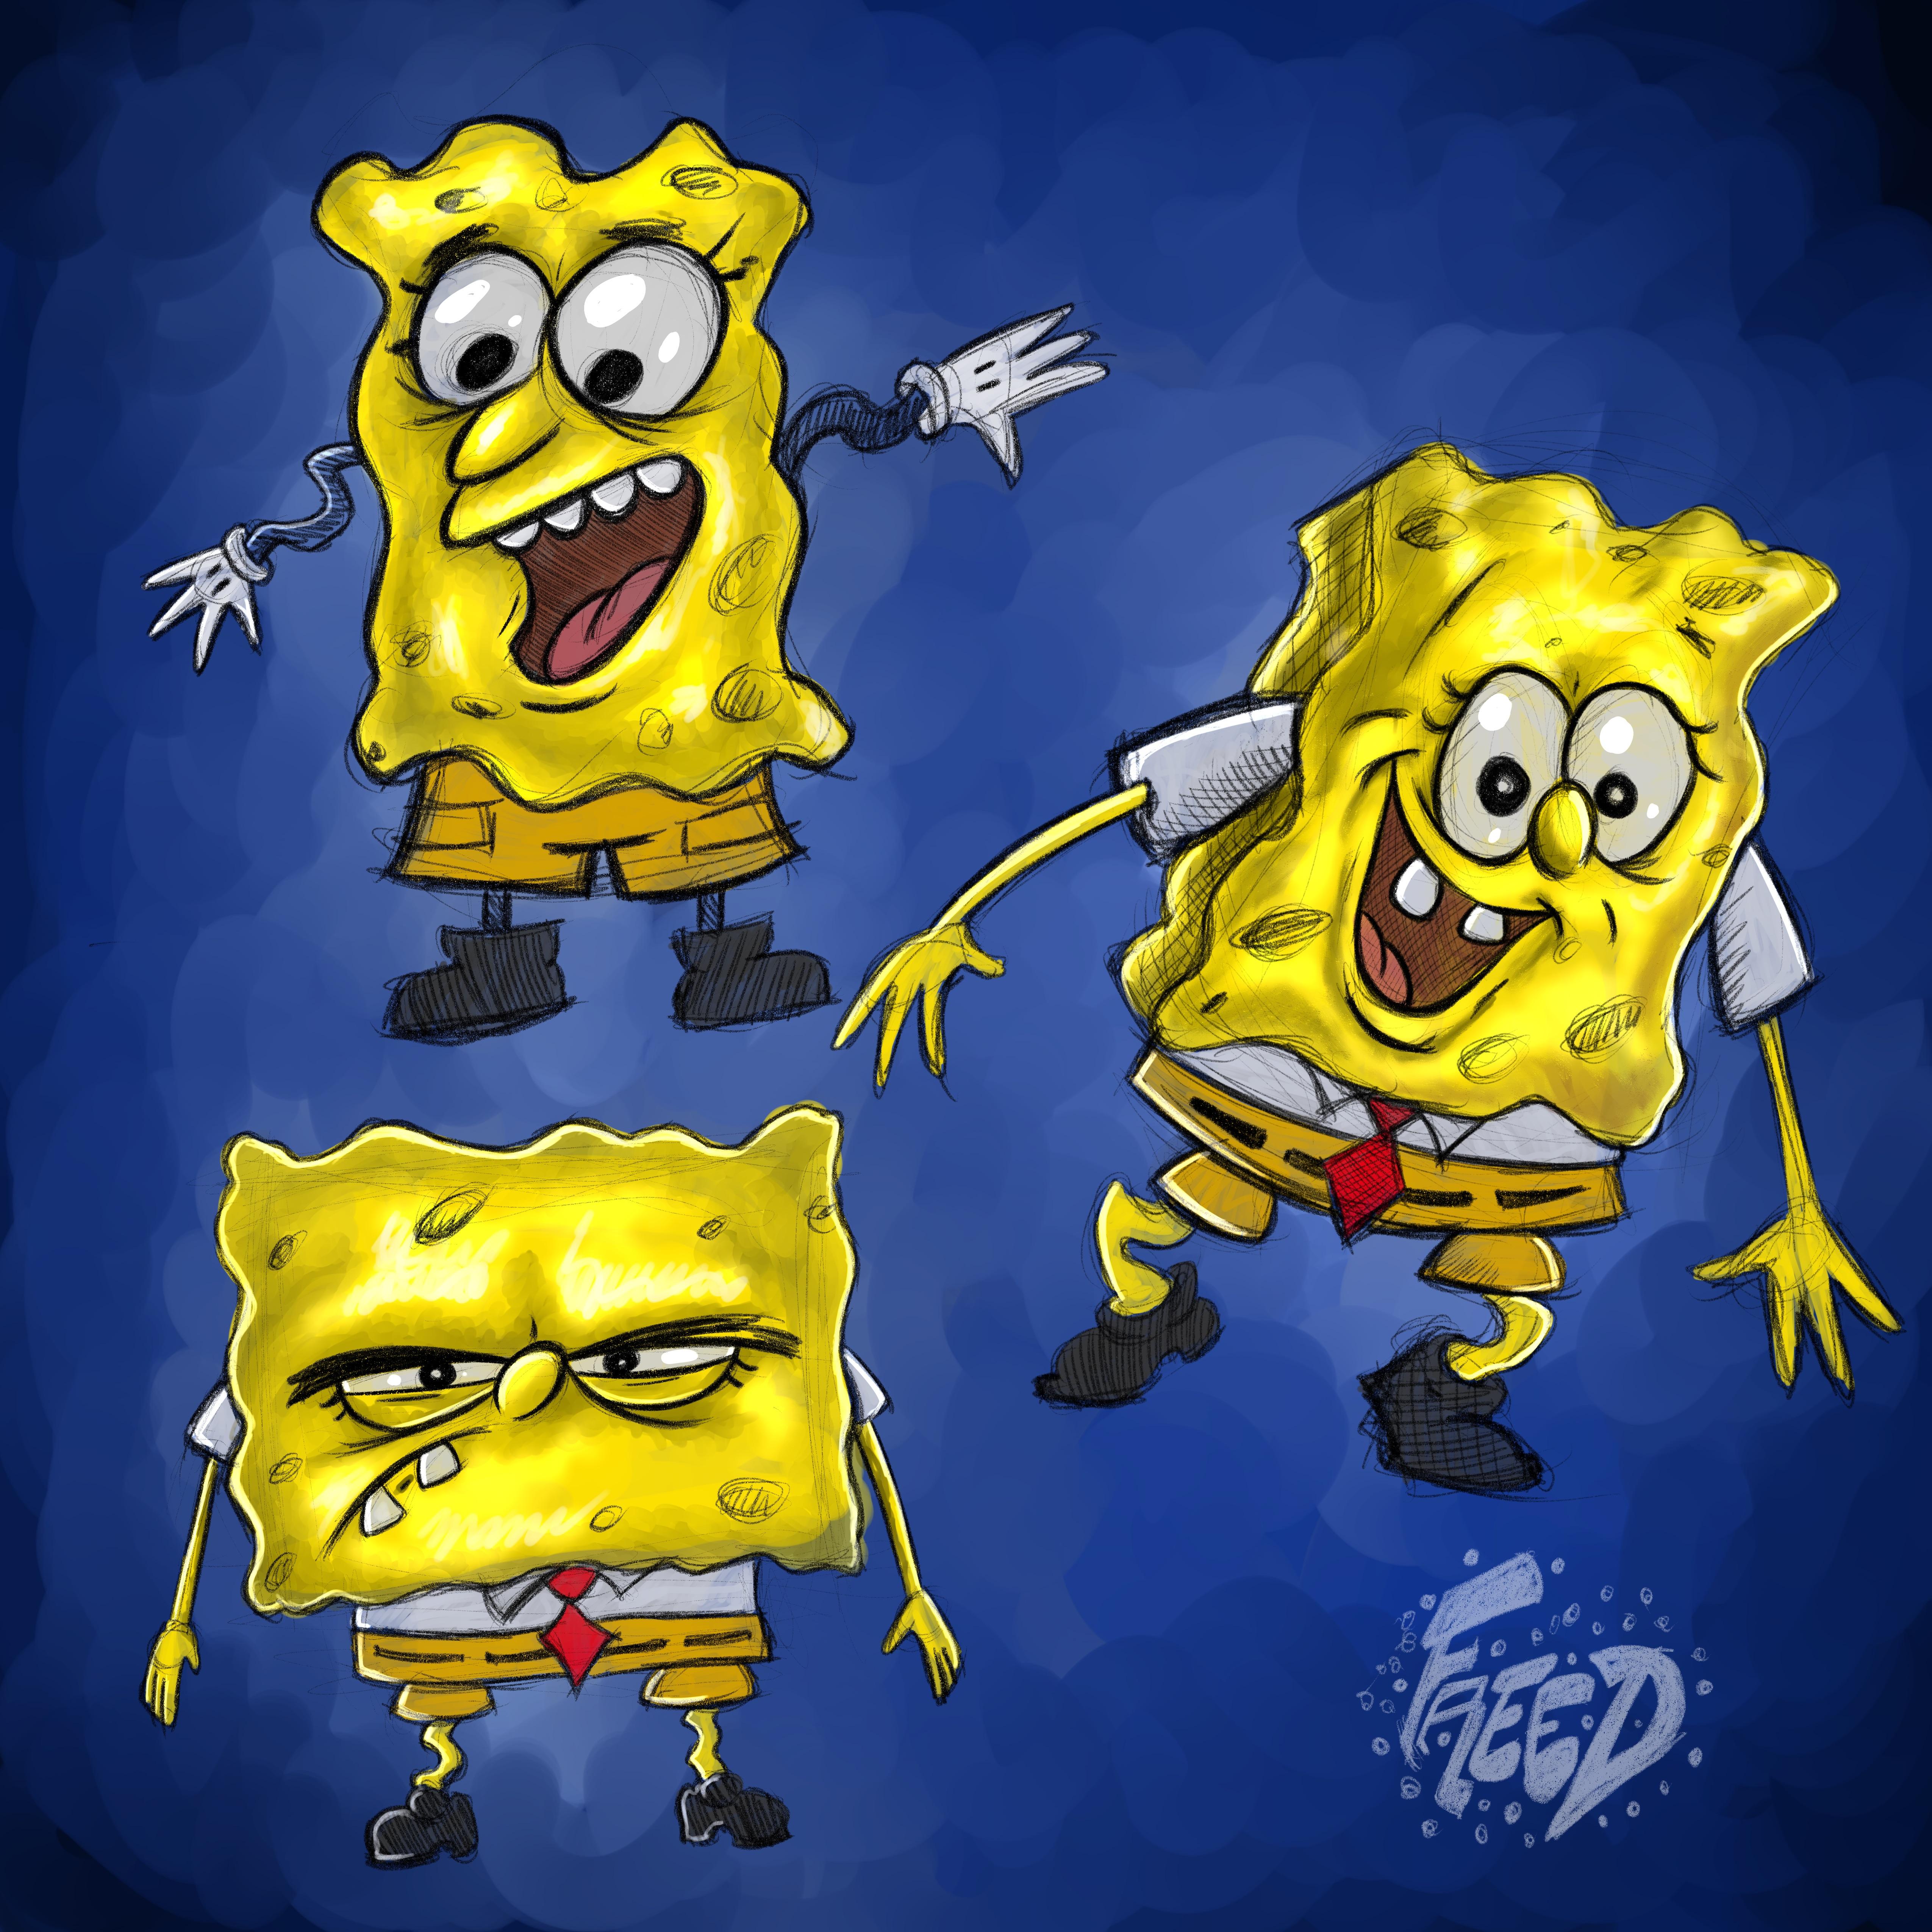 Spongebob Concept Art Fan Art I Made: Fanart